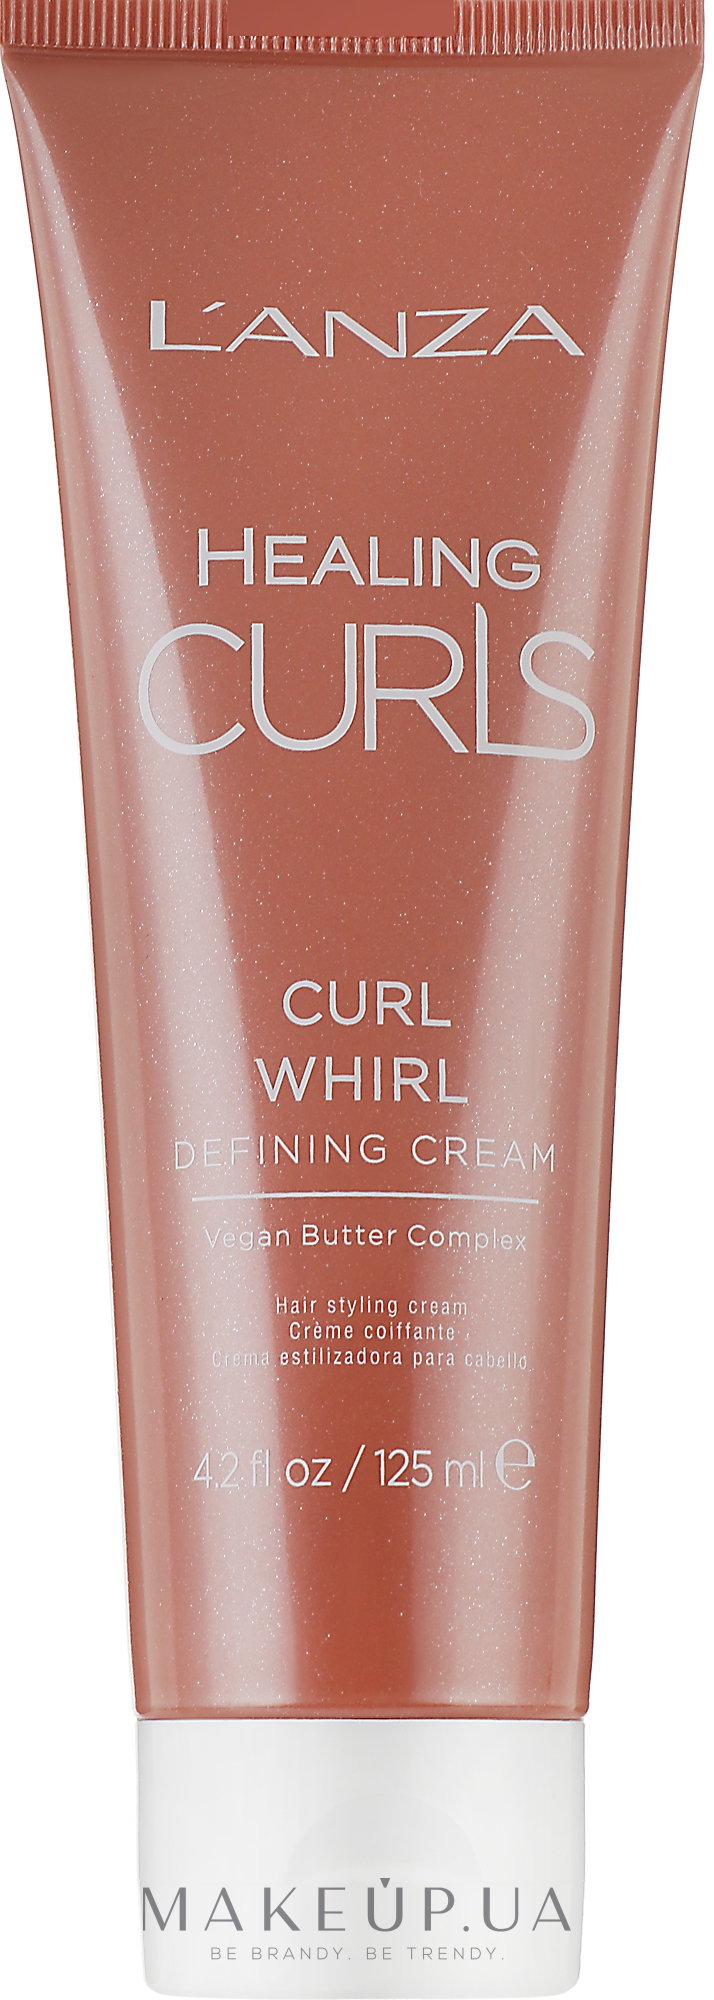 Увлажняющий крем для волос - L'anza Curls Curl Whirl Defining Cream — фото 125ml